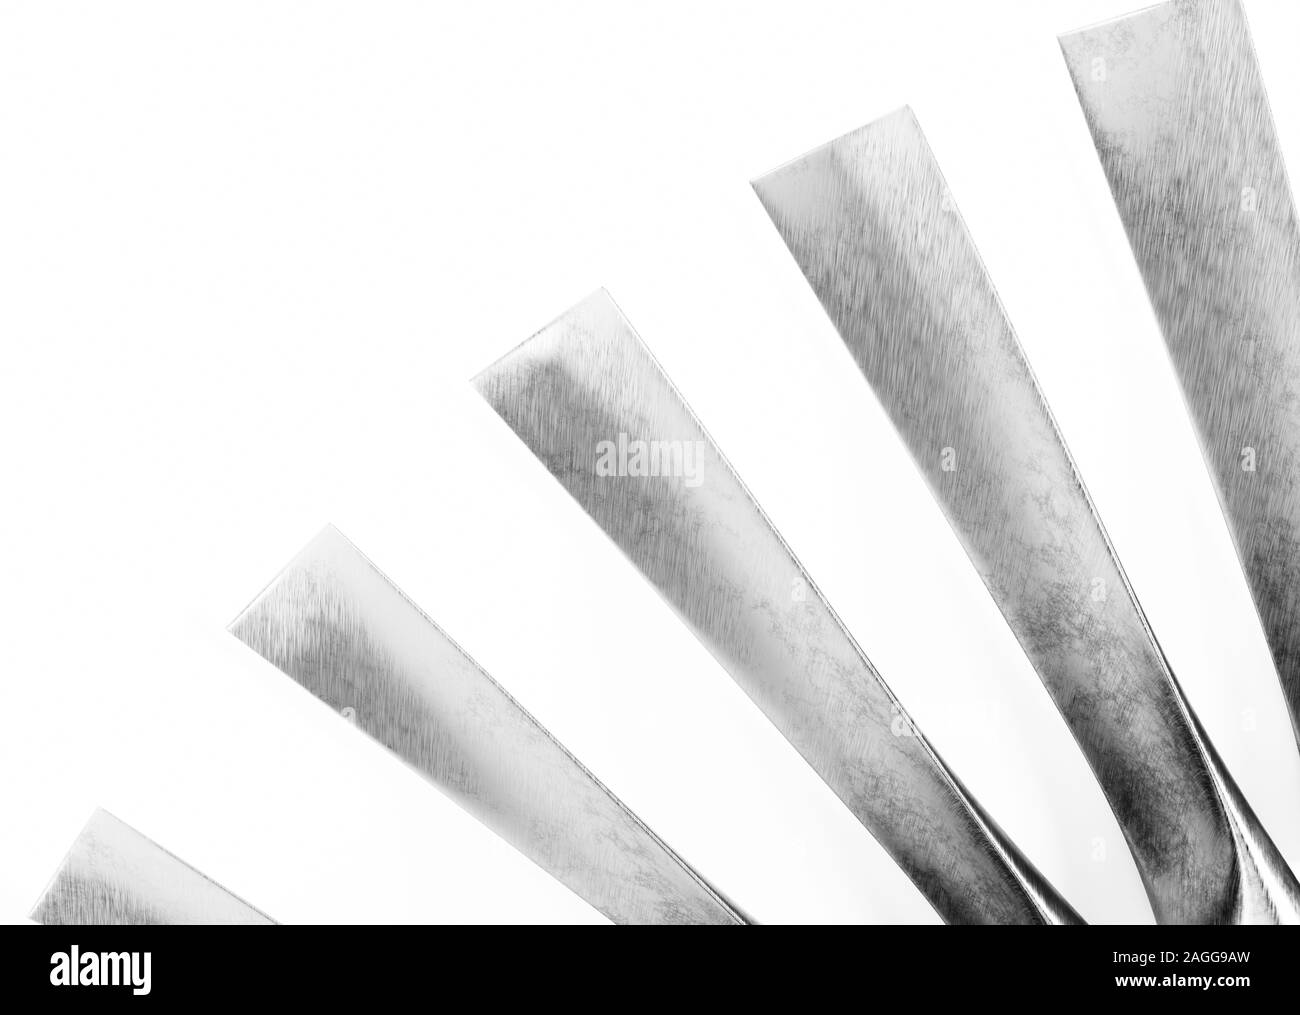 Turbine blades close up. 3d illustration. Stock Photo